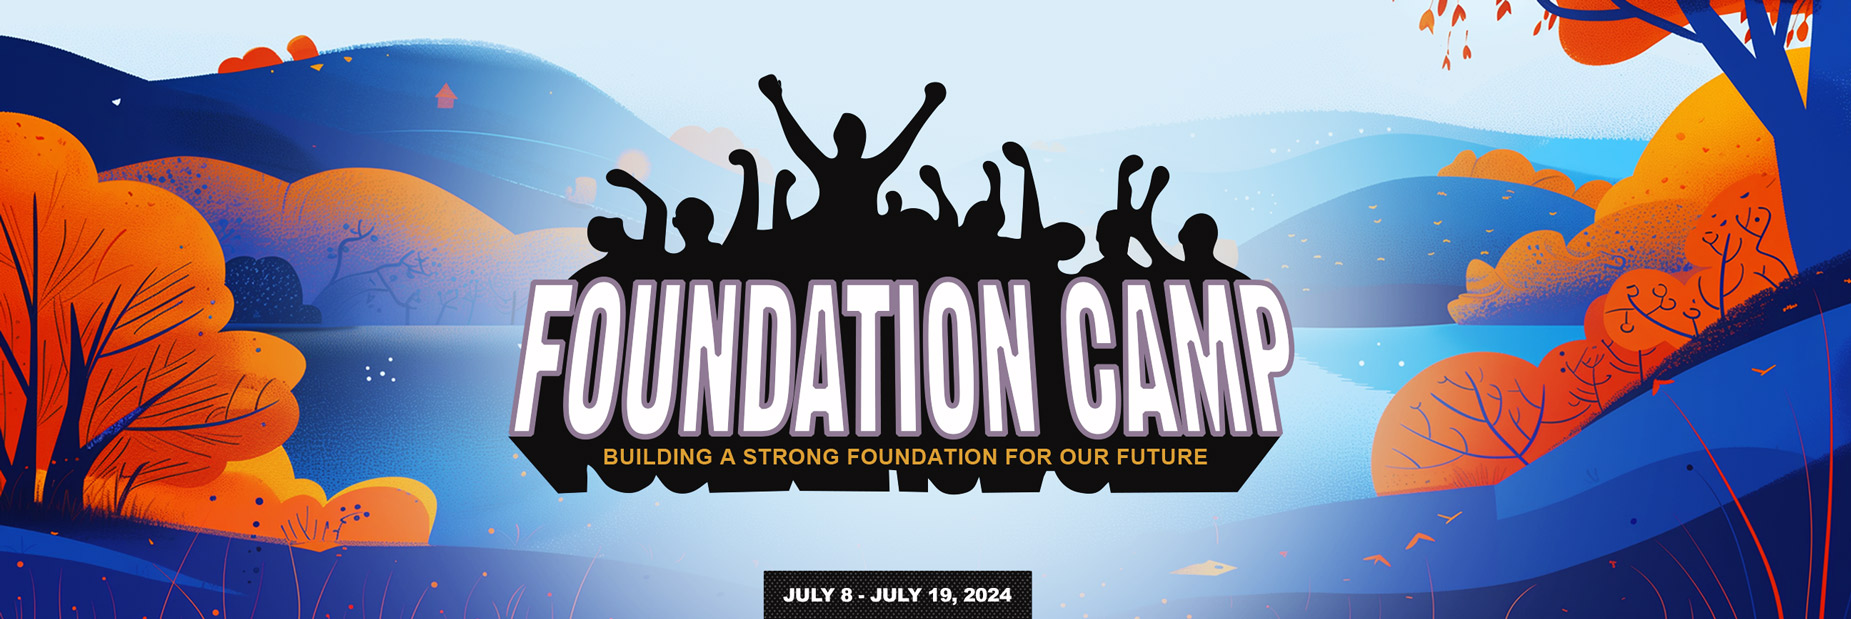 Foundation Camp logo on background of orange vegetation and blue lake. July 8-19, 2024 date range listed.